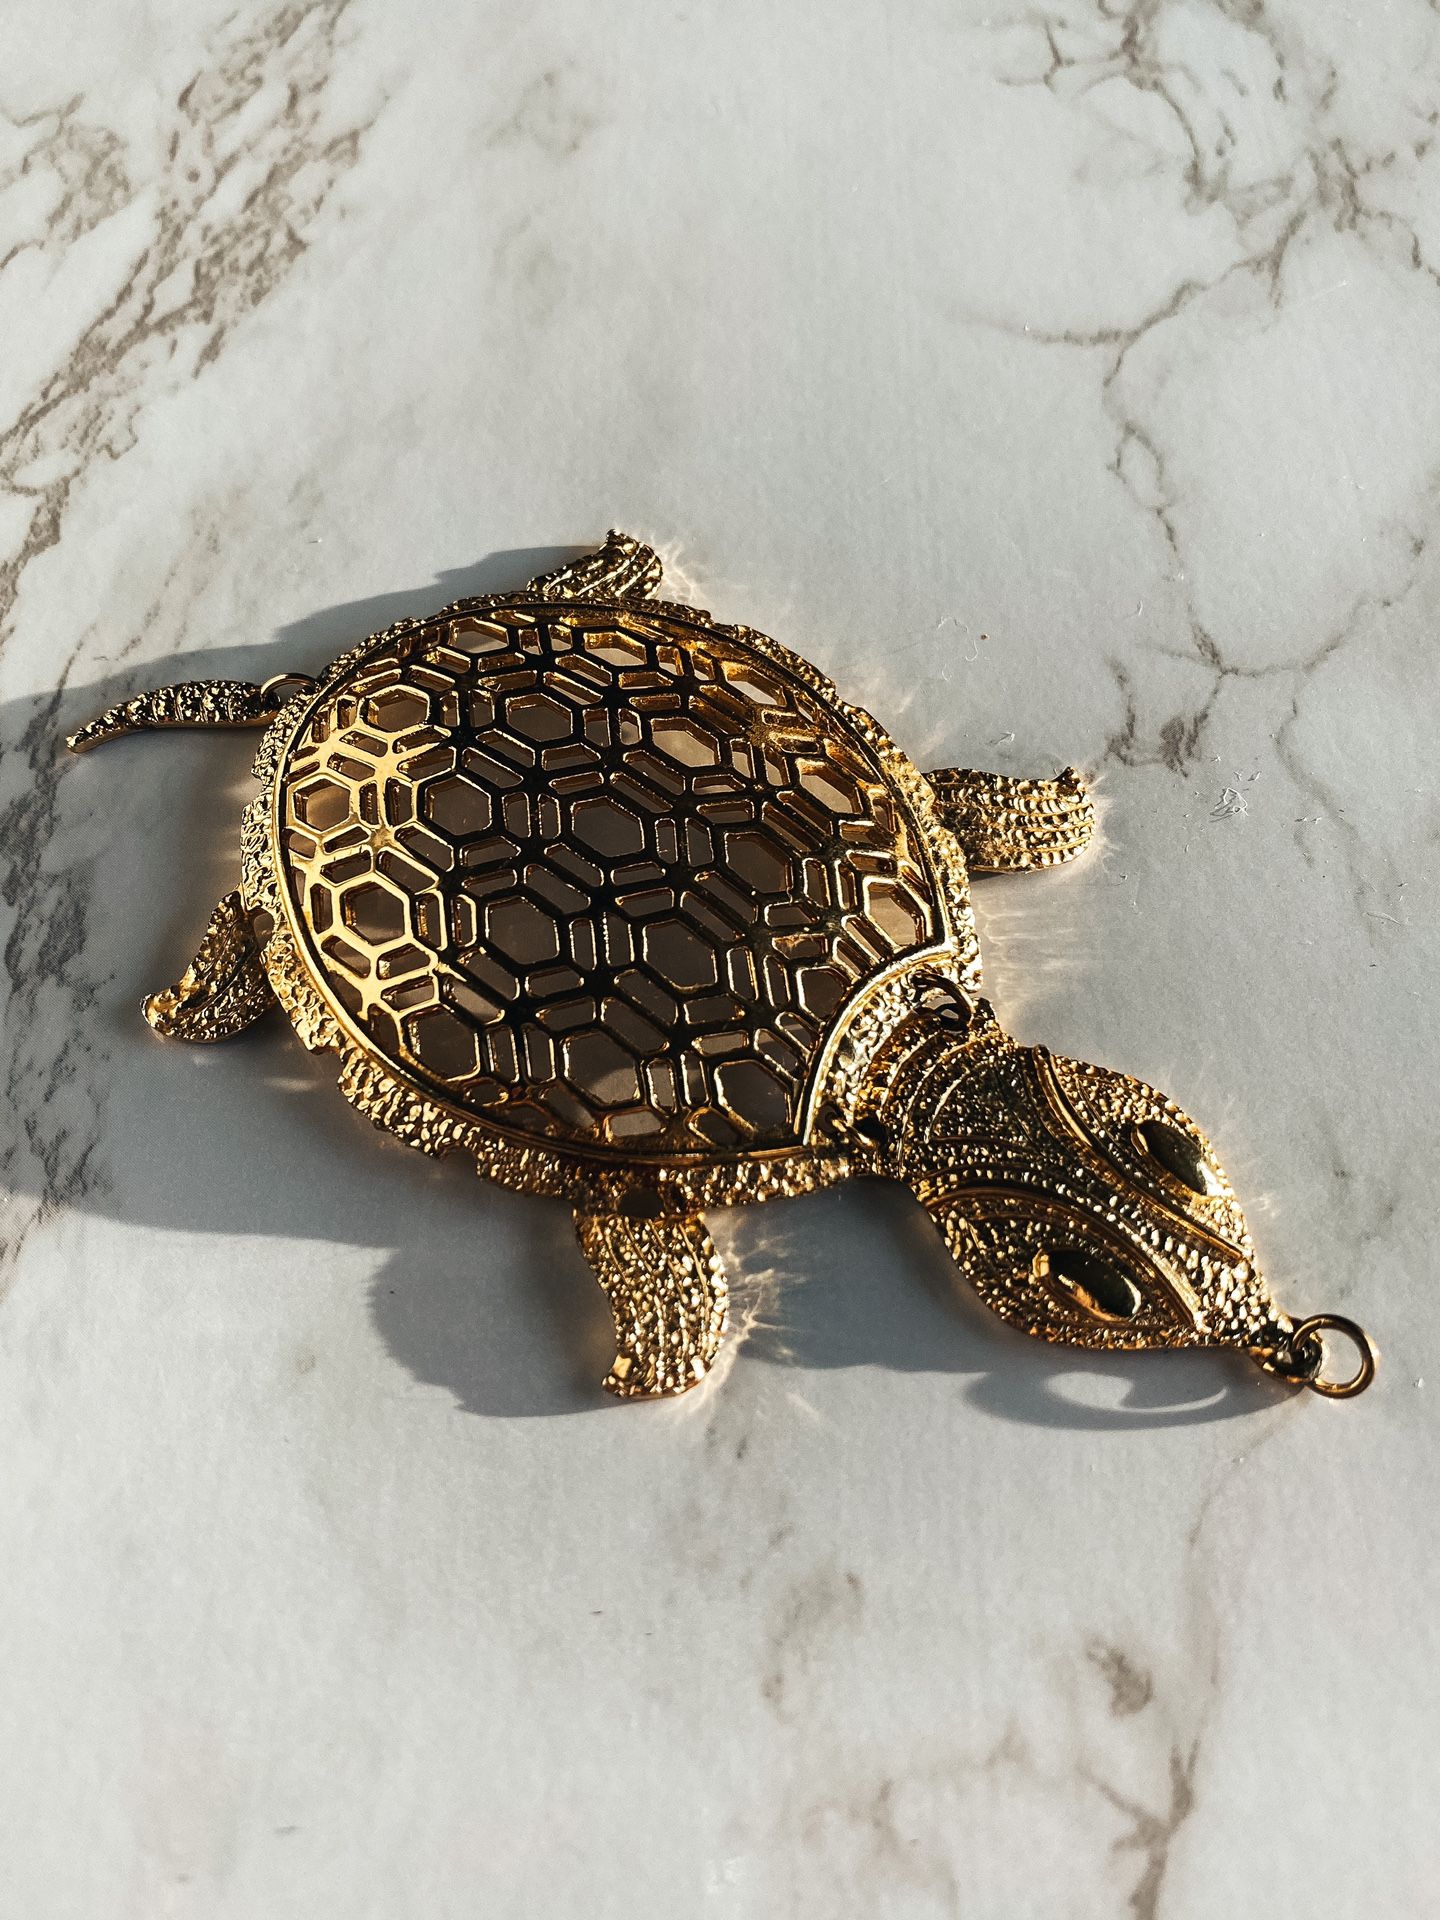 Turtle necklace charm